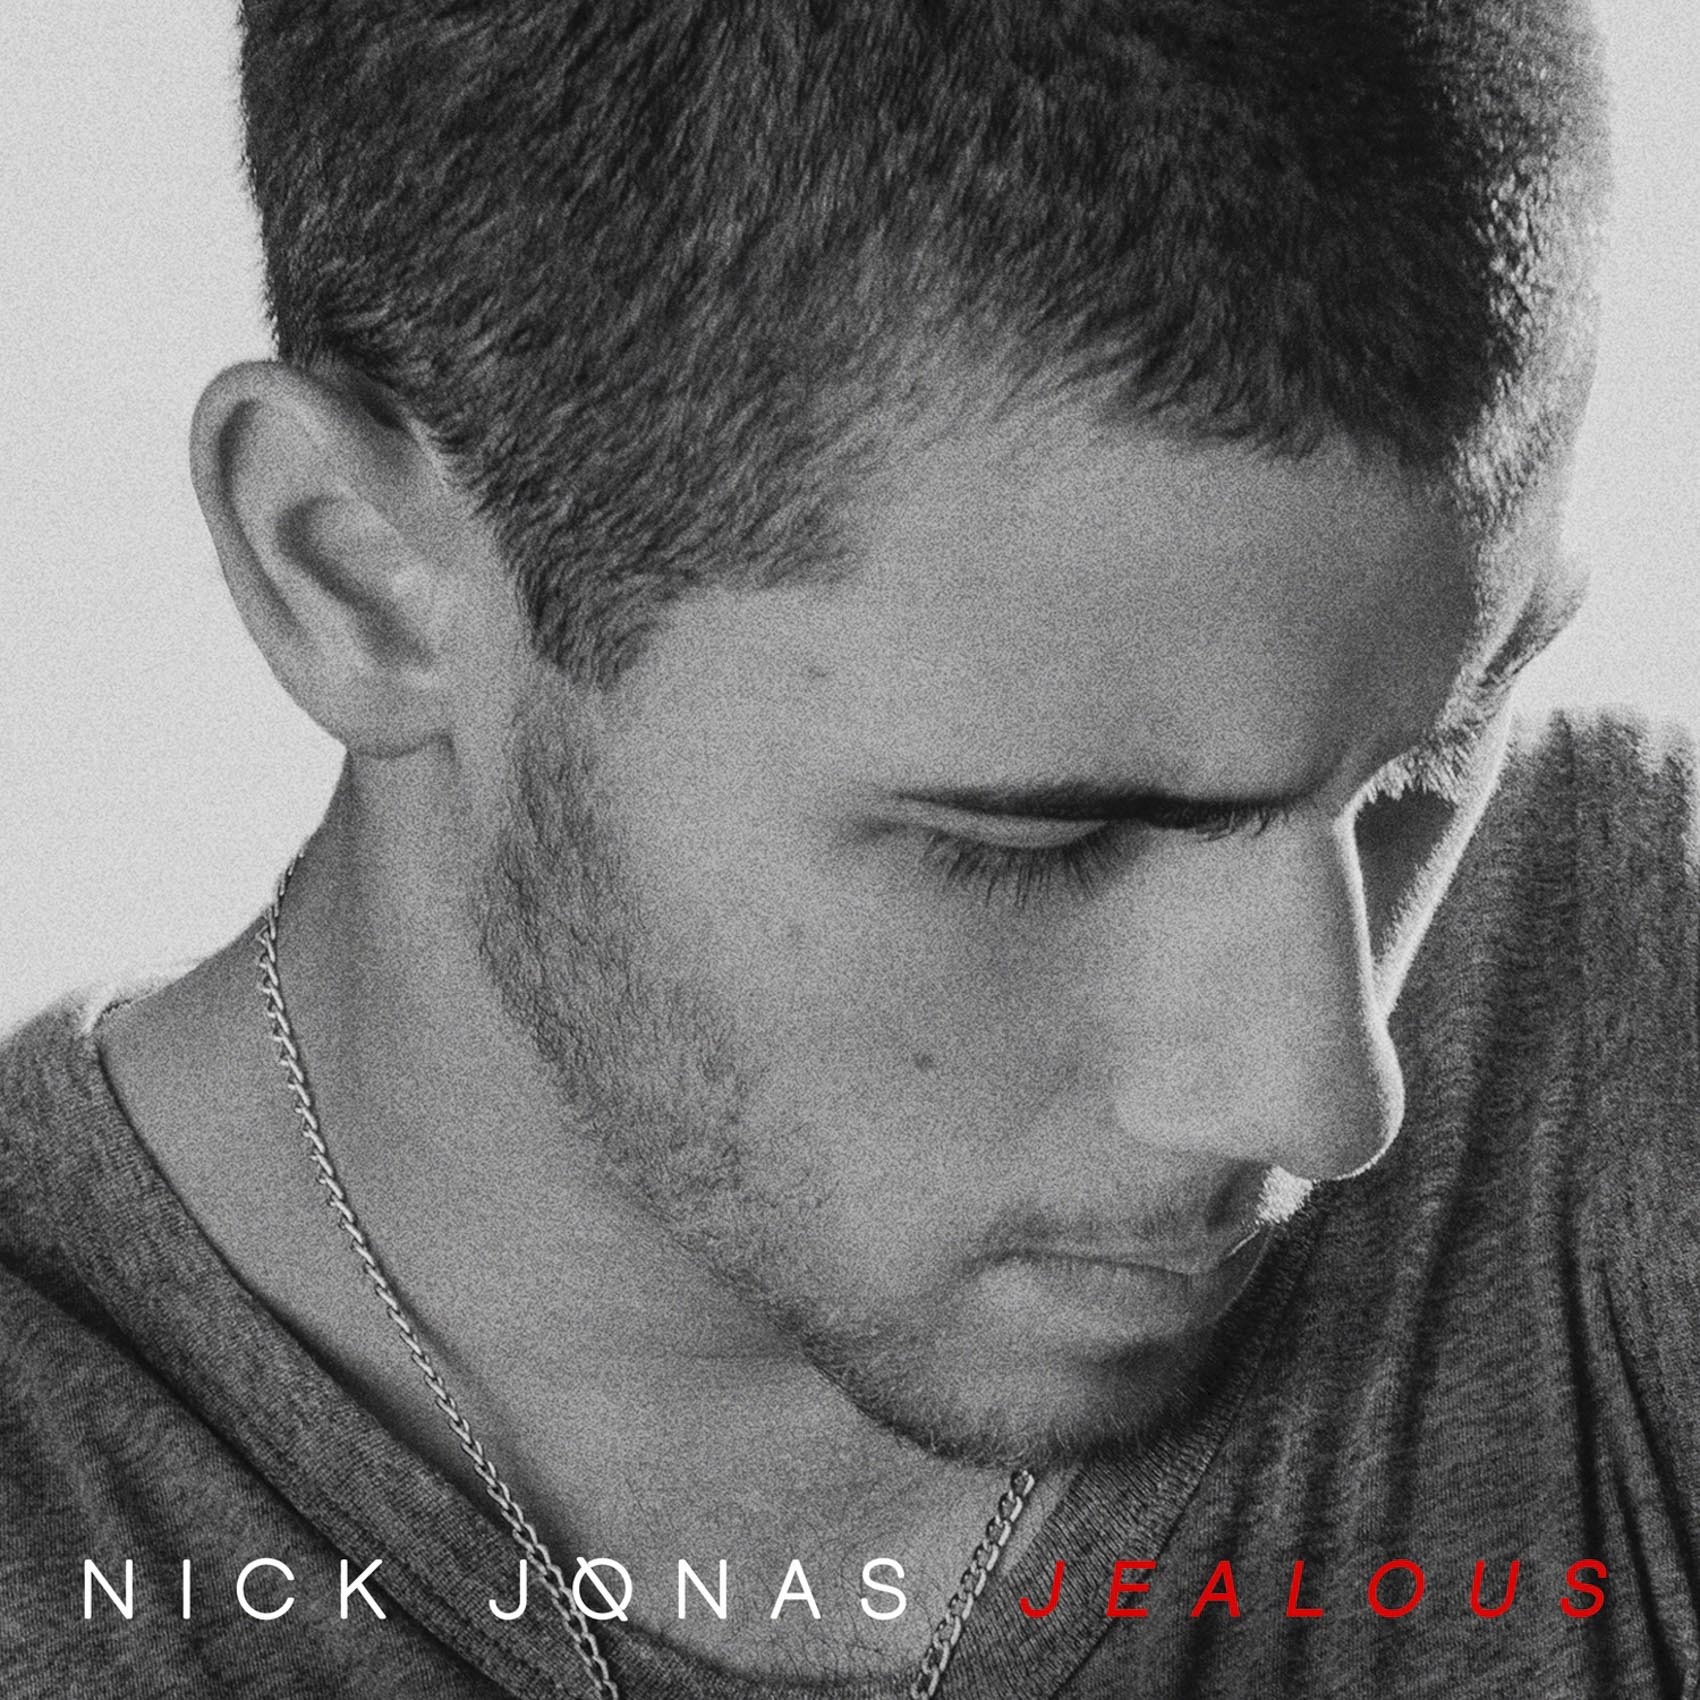 Nick Jonas "Jealous" \\ Andrew Zaeh Photo + Motion